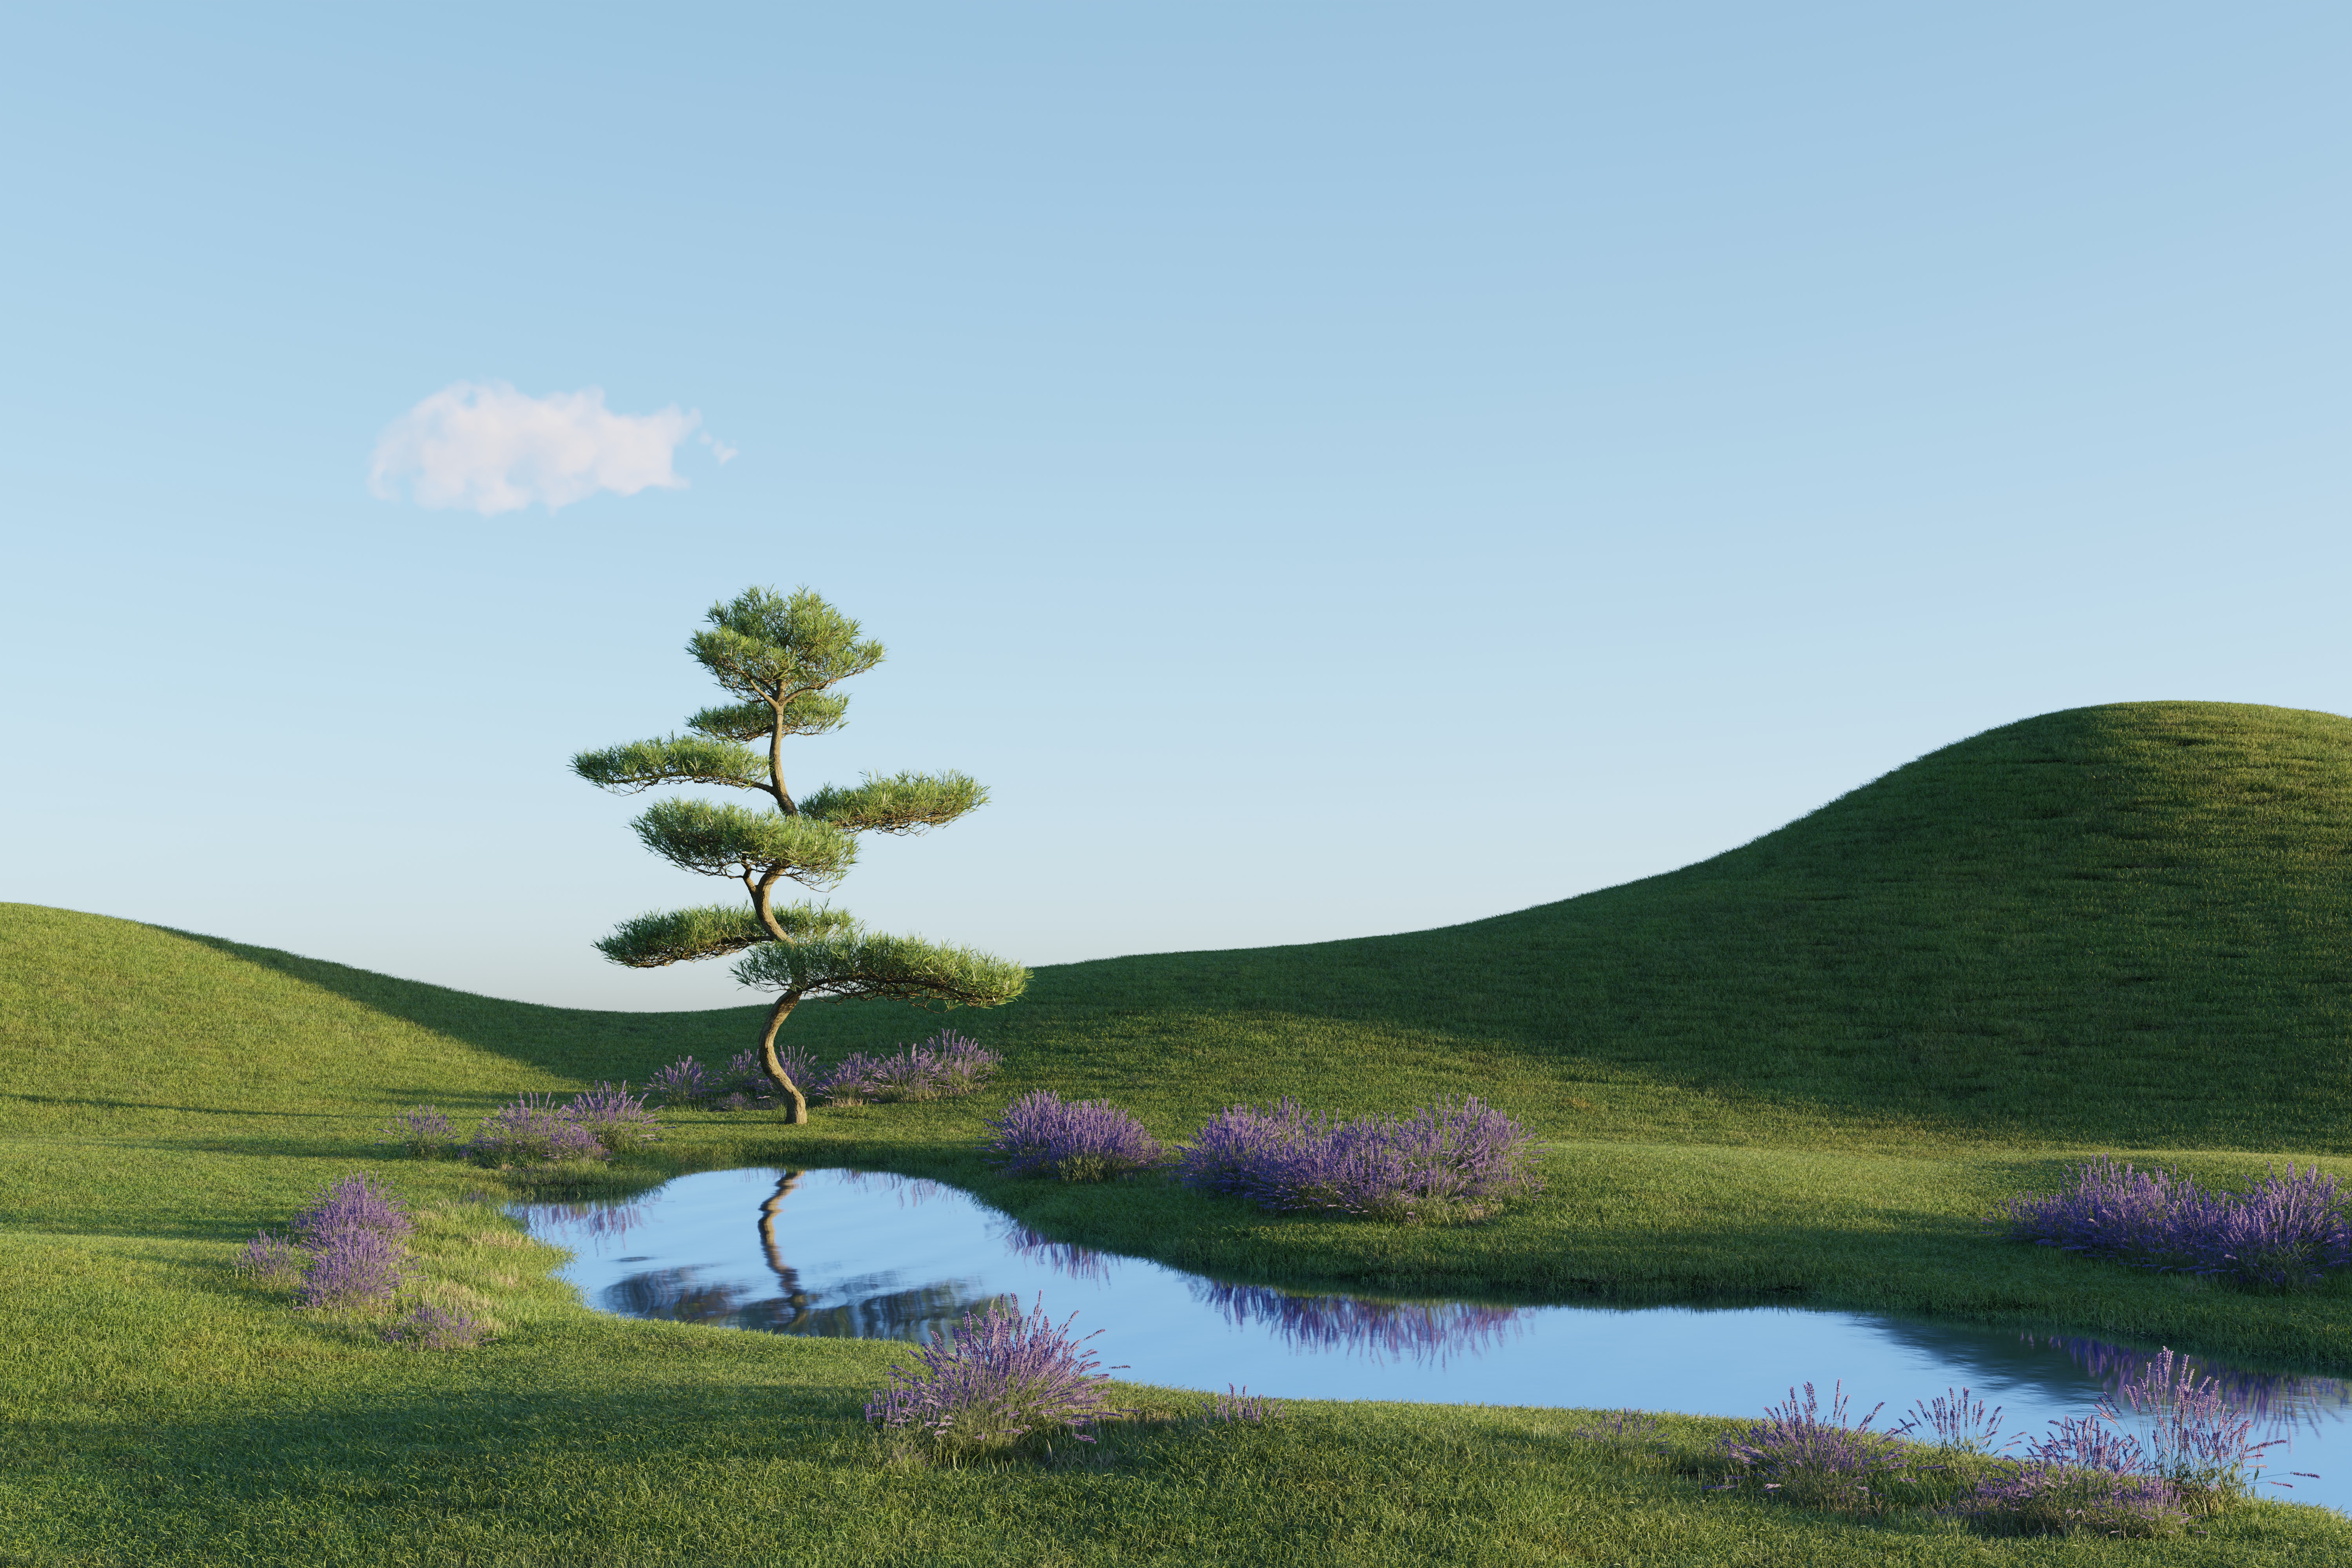 Digital Digital Art Artwork Render 3D Minimalism Nature Landscape Field Trees River Reflection Water 6000x4000